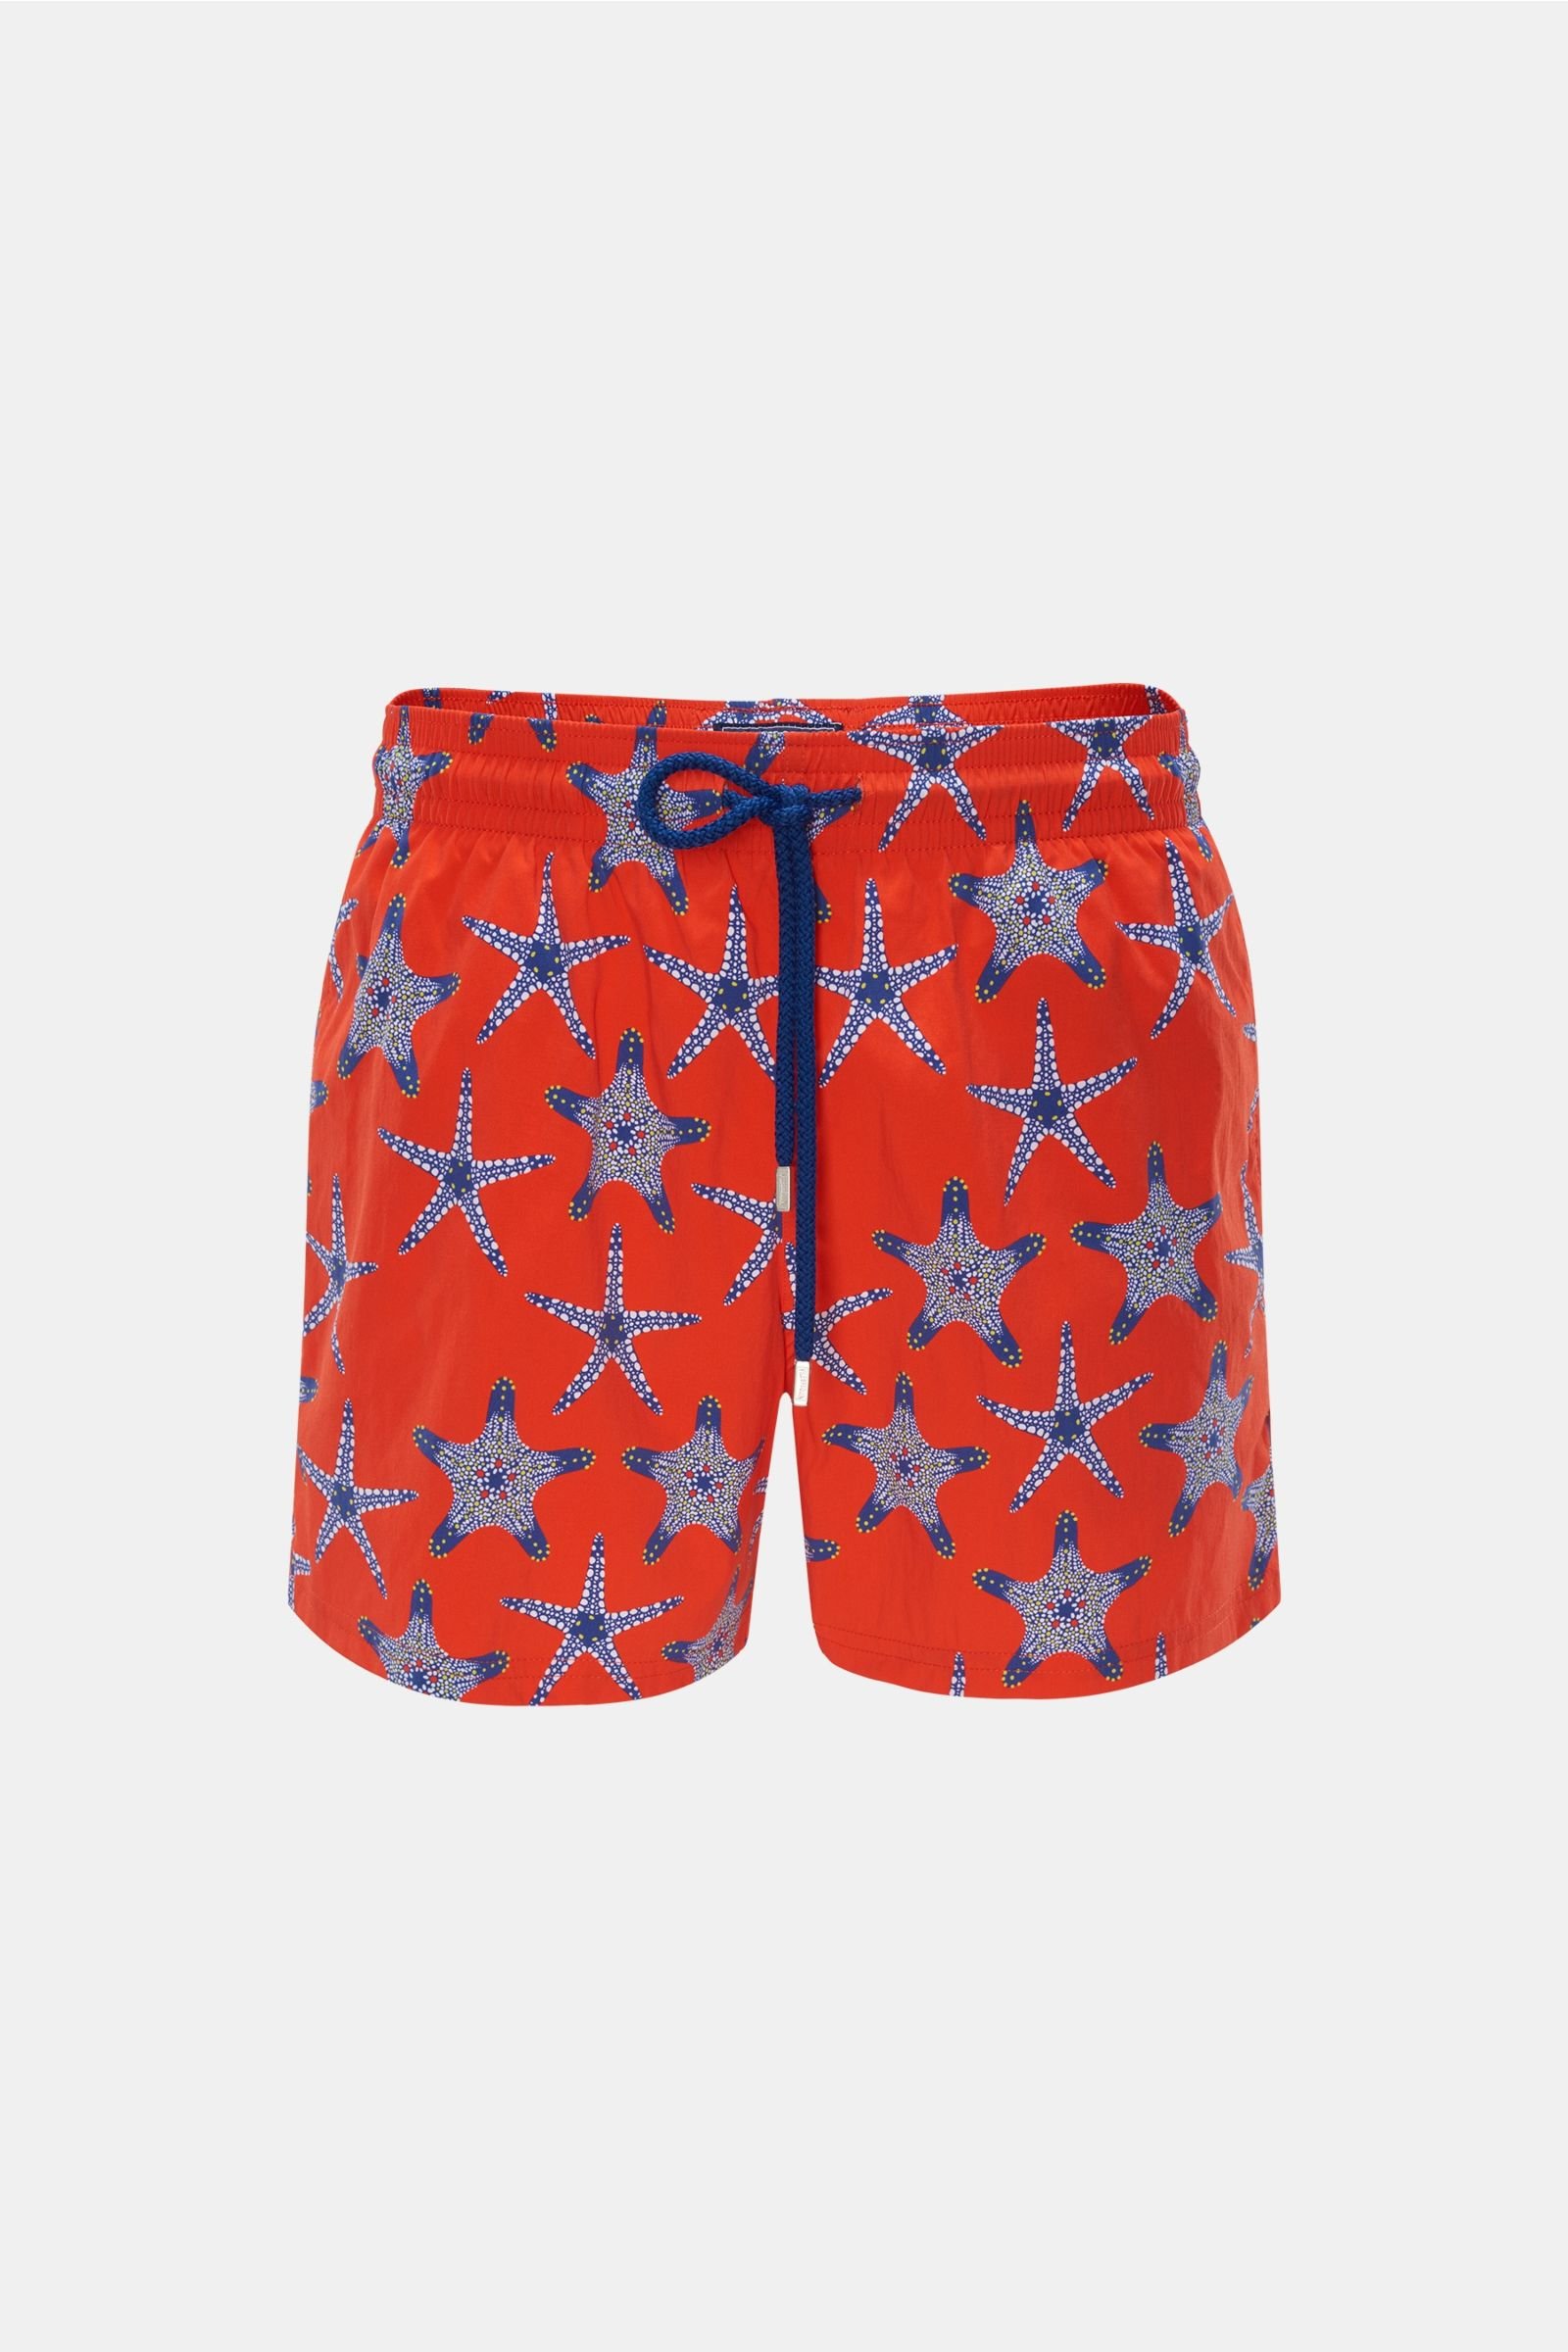 Swim shorts 'Moorise' light red/navy patterned